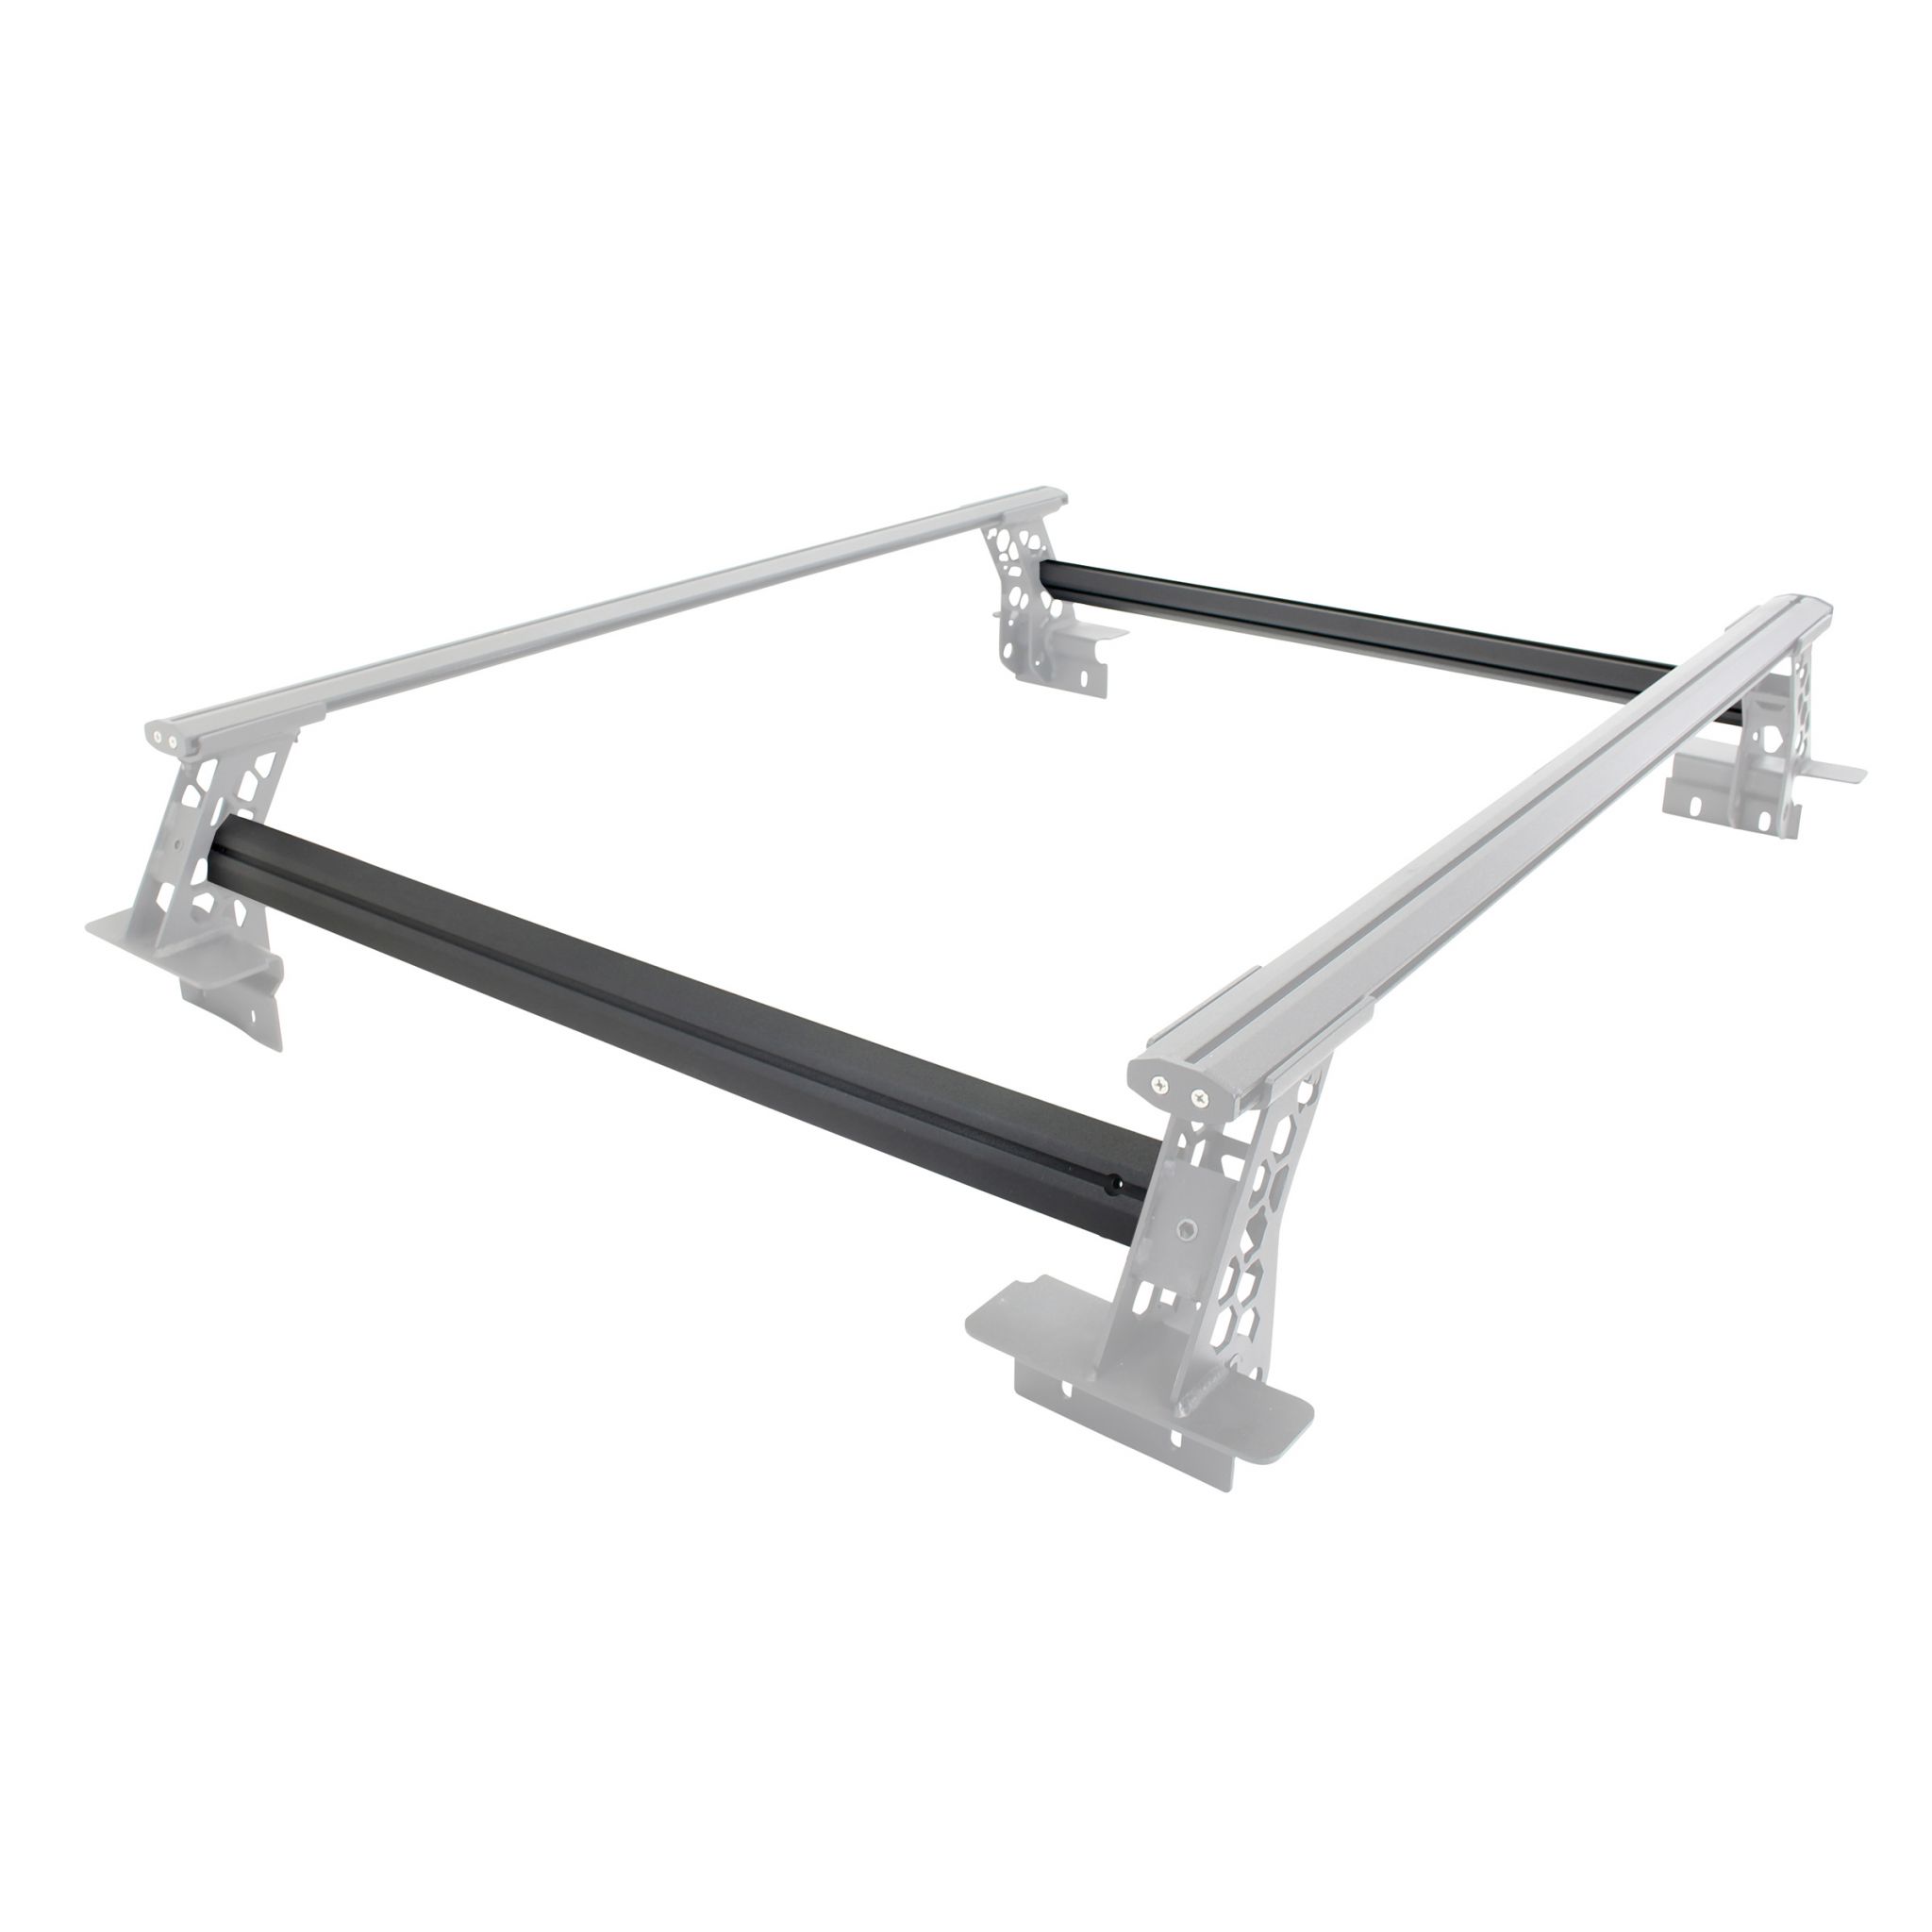 Go Rhino 5935010T - XRS Cross Bars 37 3/4" Side Rail Accessory Kit - Textured Black